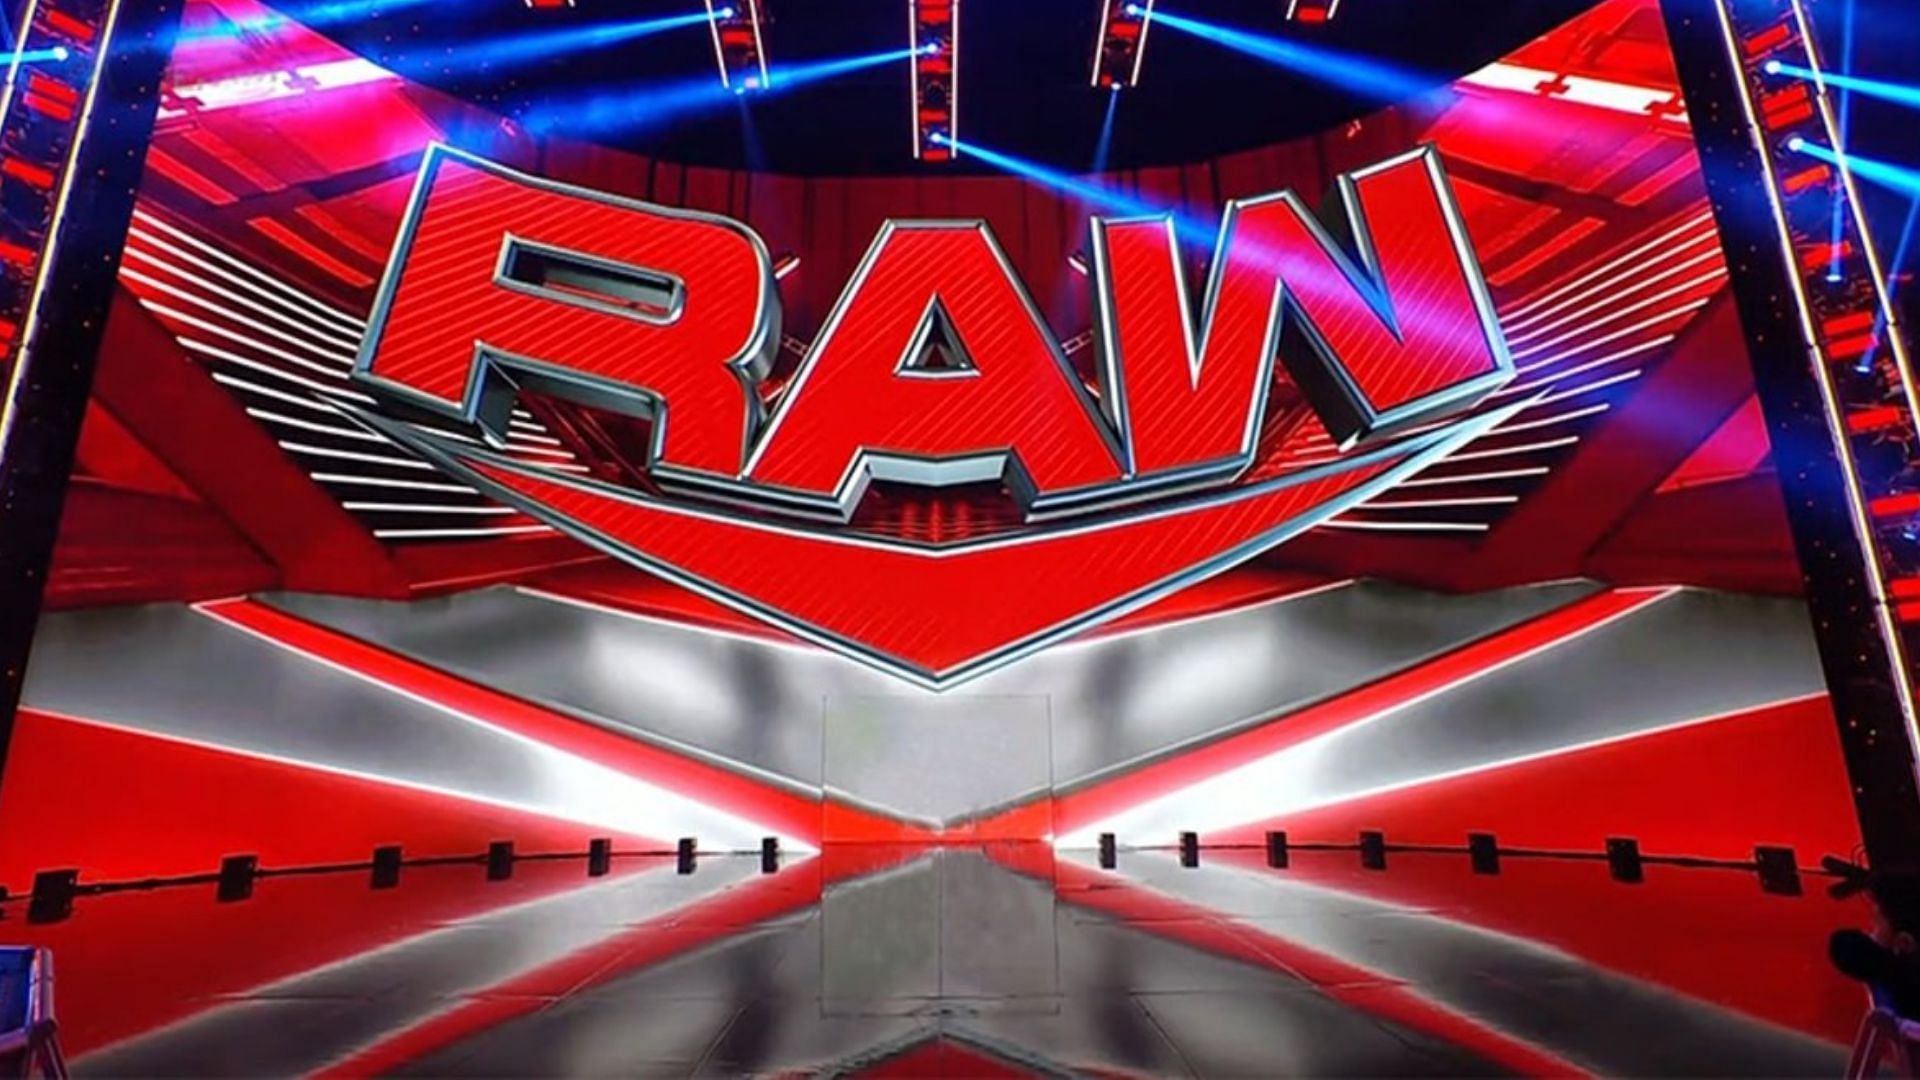 WWE RAW will air live tonight in Florida.